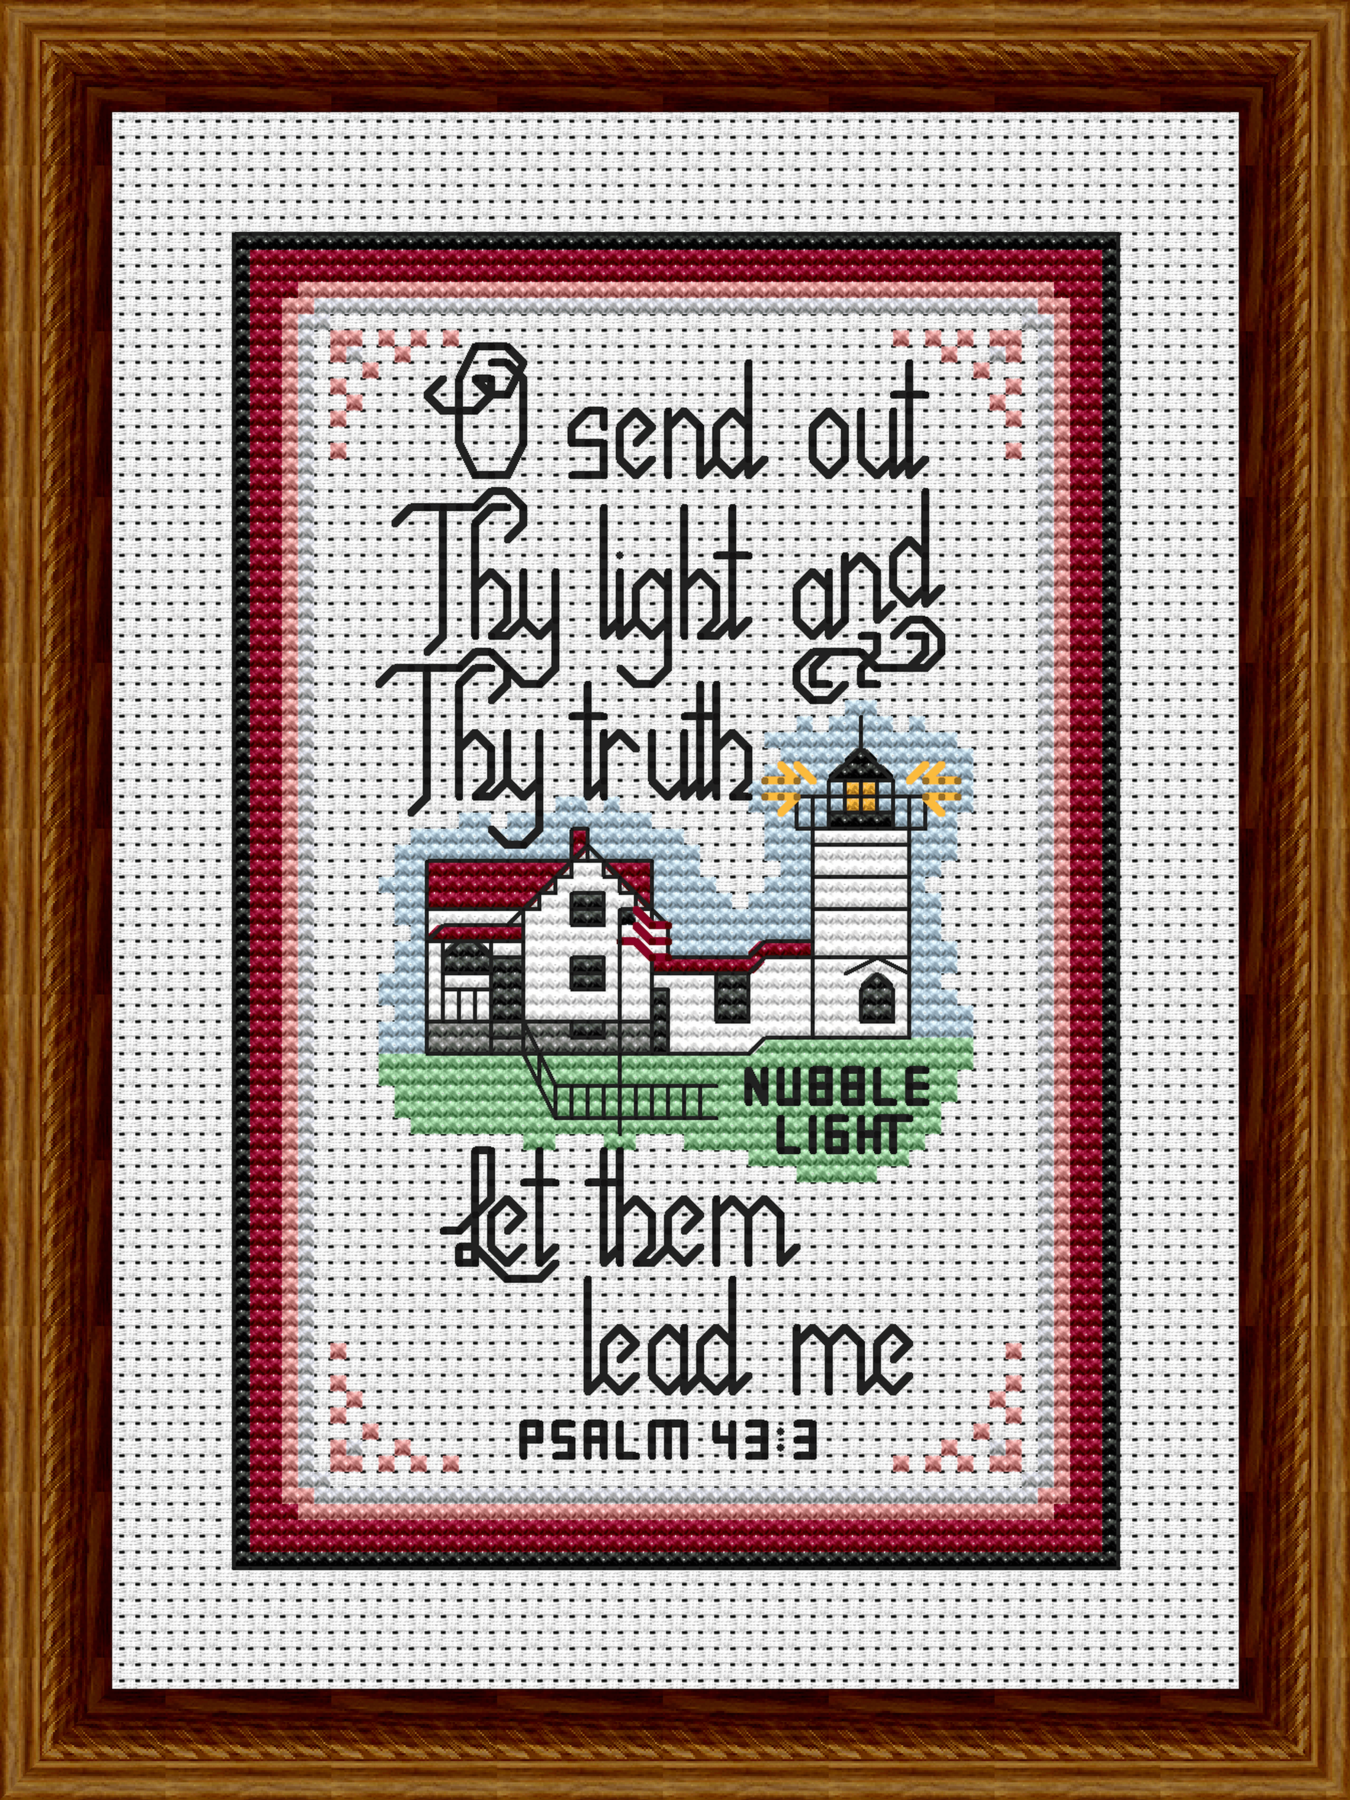 Nubble Light Cape Neddick Lighthouse Bible Verse Cross Stitch Pattern 840